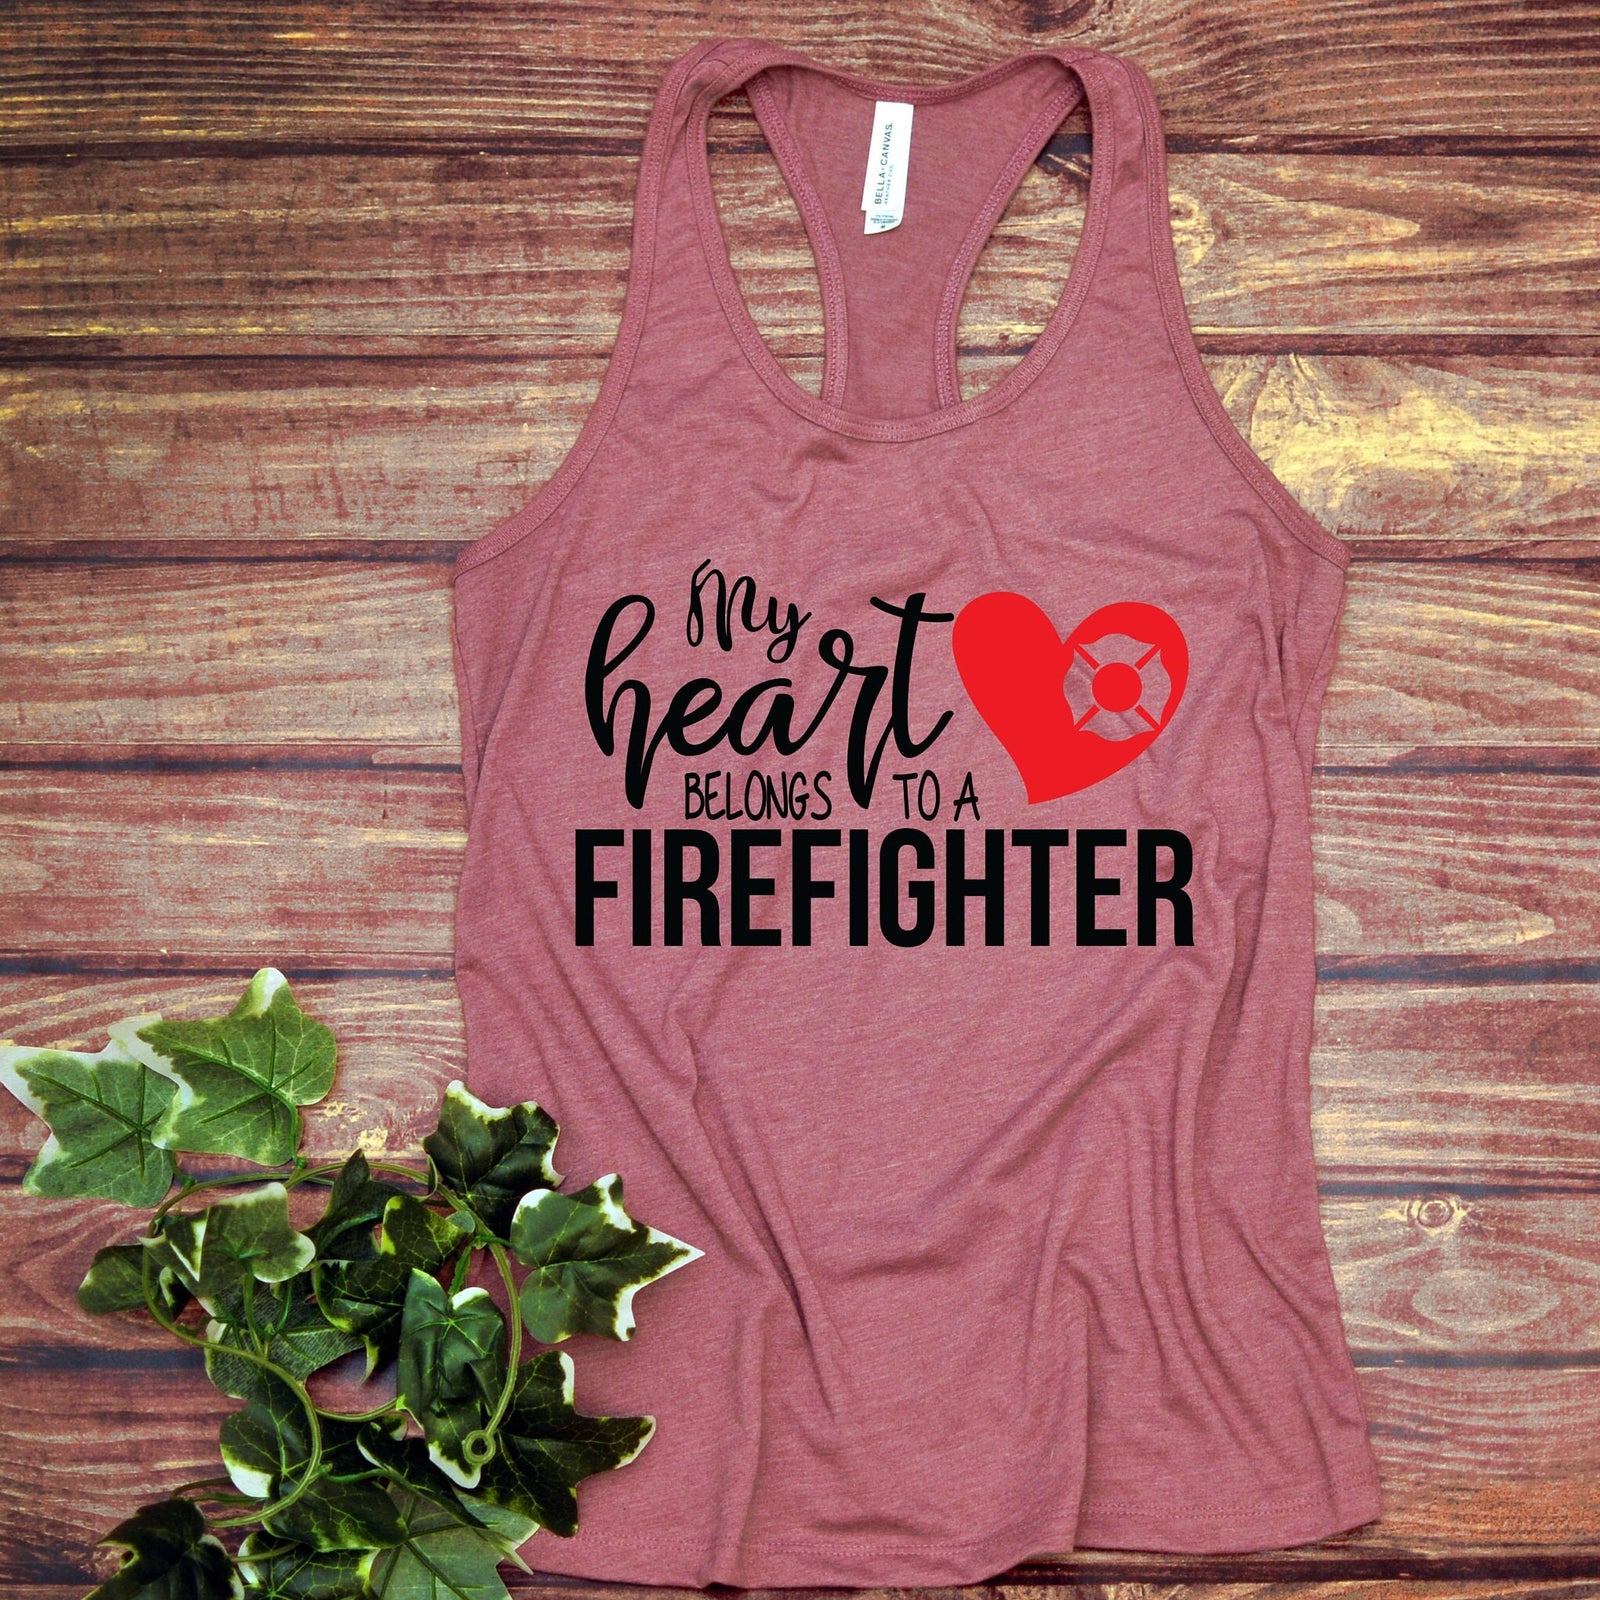 My Heart Belongs to a Fire Fighter Adult Racer back Tank Top- Firefighter Wife